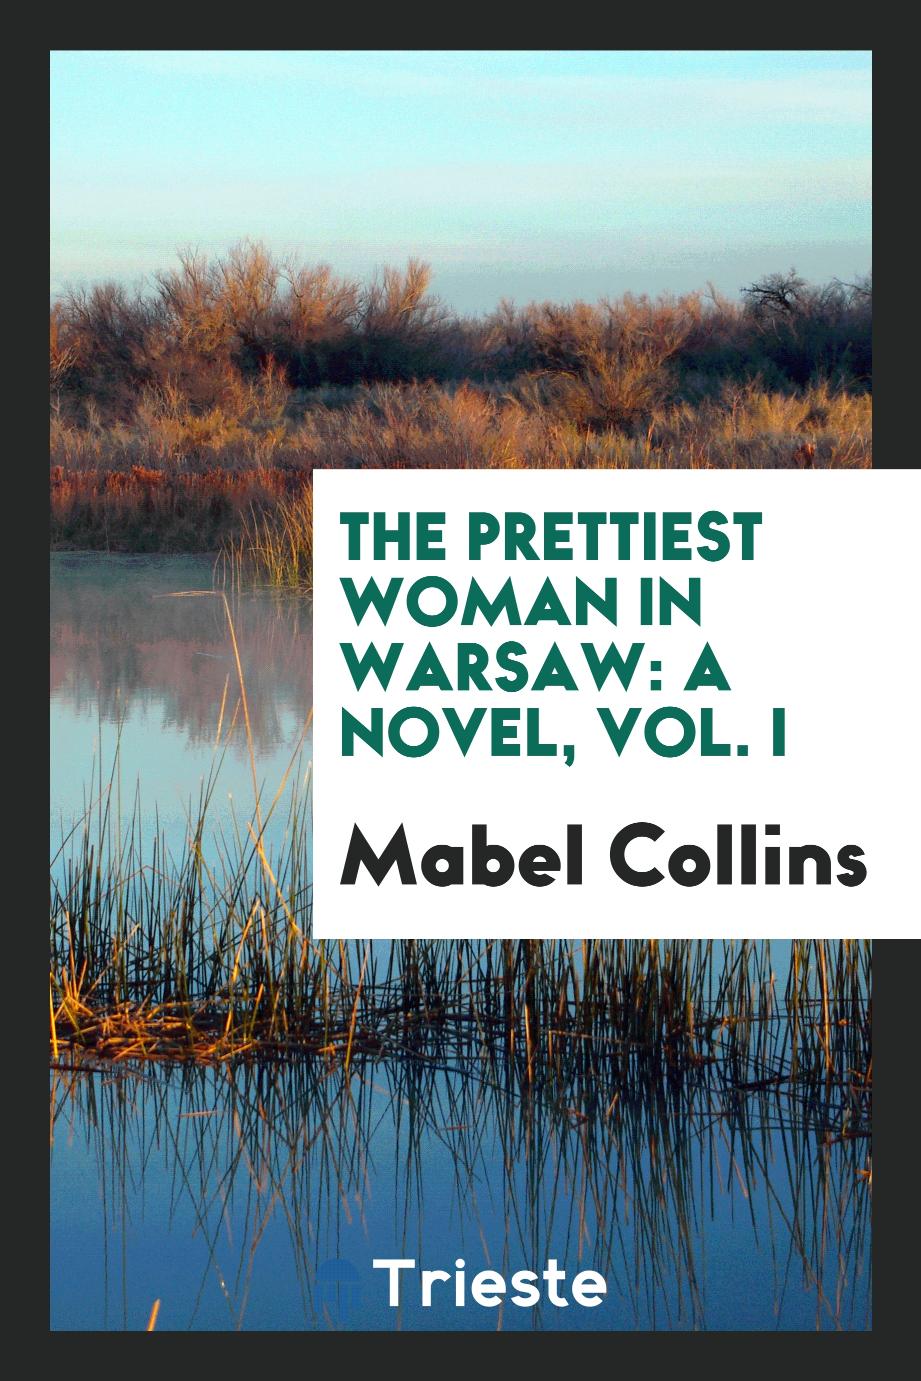 The Prettiest Woman in Warsaw: A Novel, Vol. I